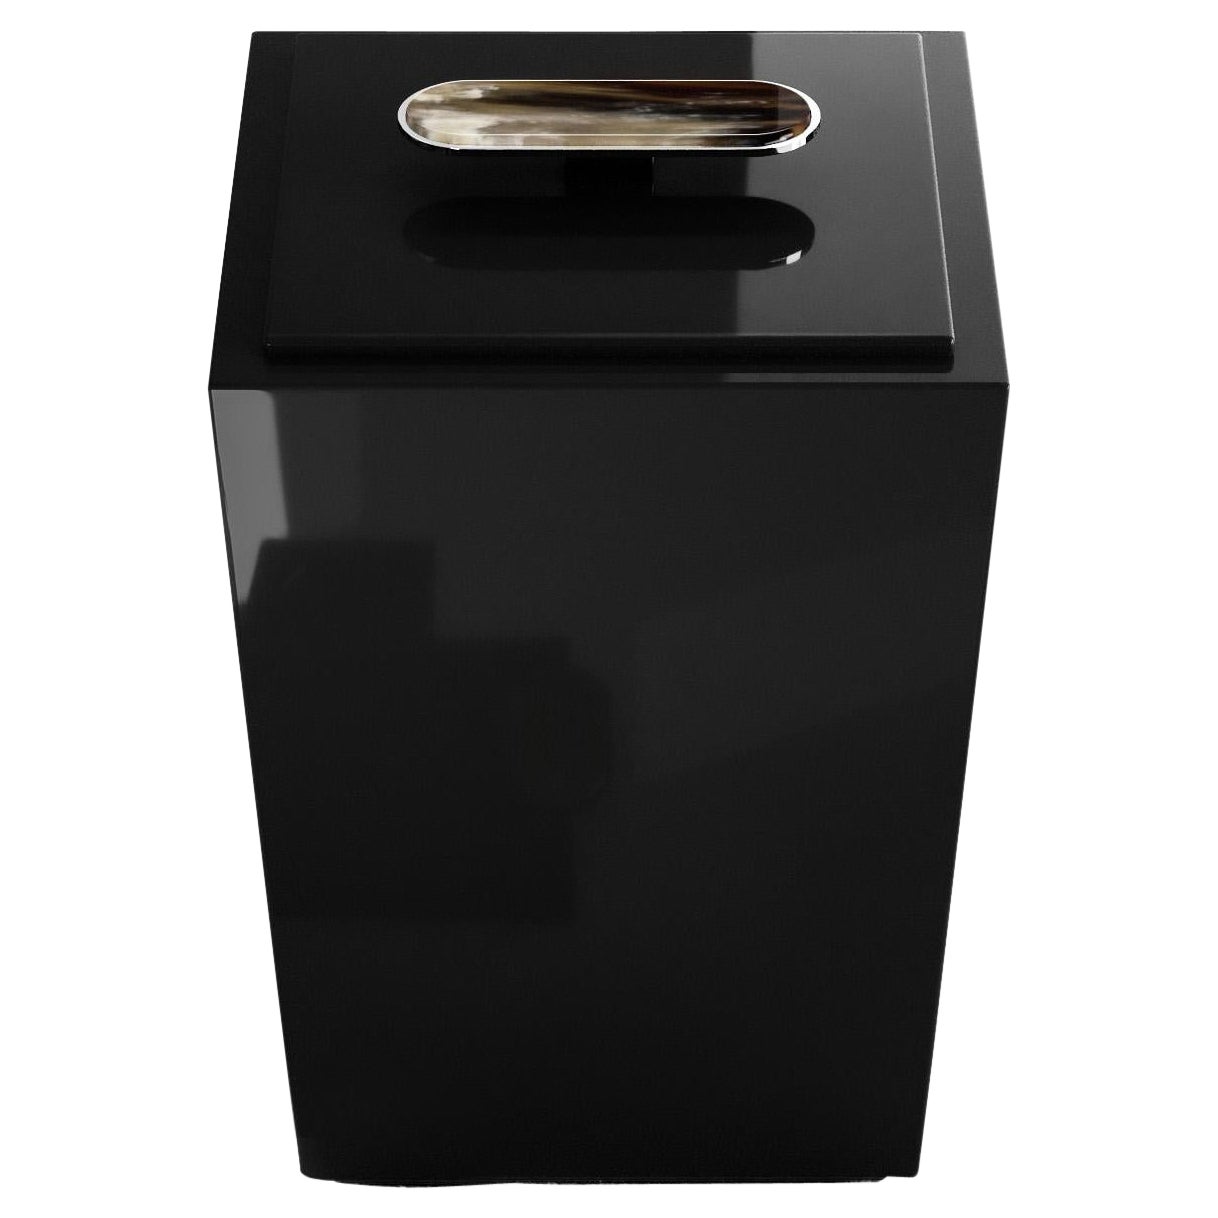 Bicco Waste Papierkorb aus schwarz lackiertem Holz und Corno Italiano, Mod. 2426 im Angebot